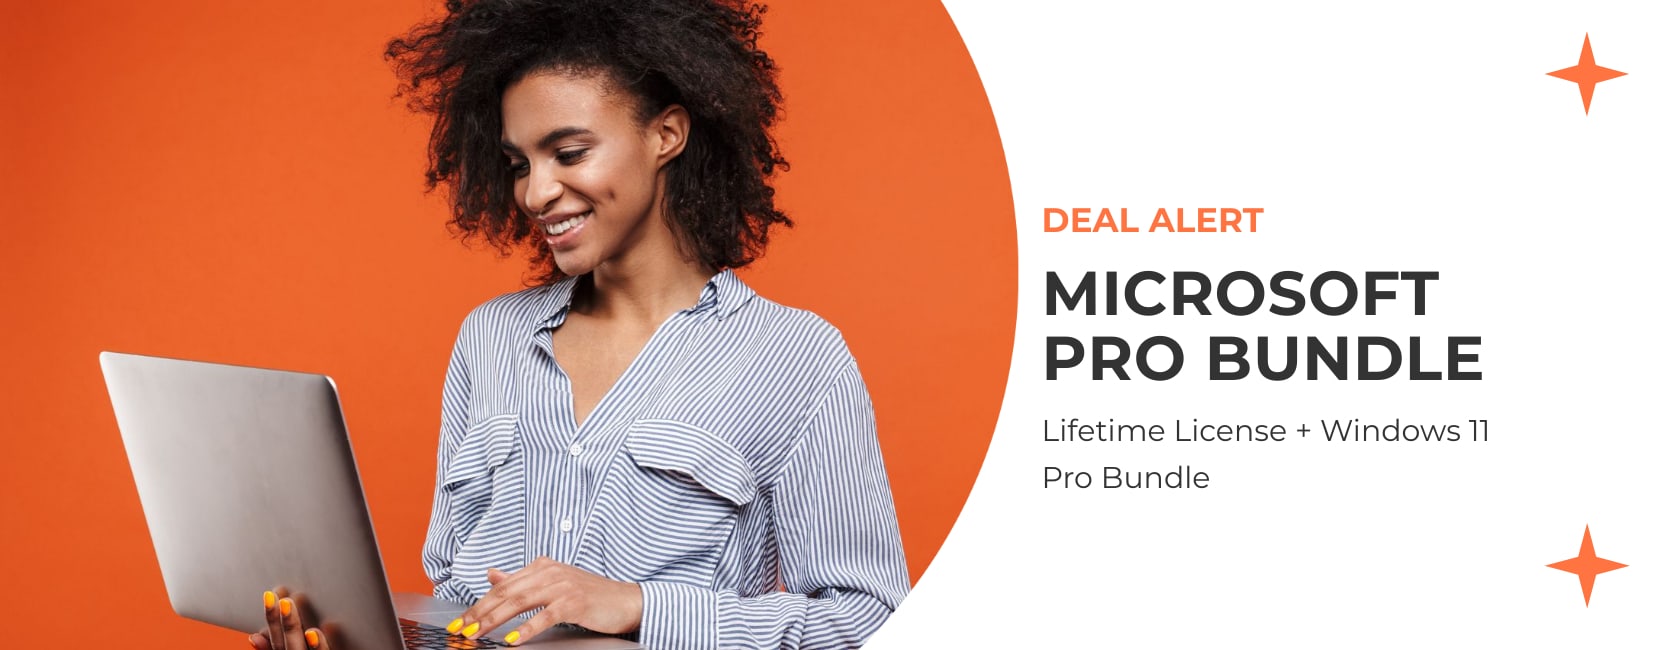 Microsoft Windows Pro Bundle Lifetime Deal